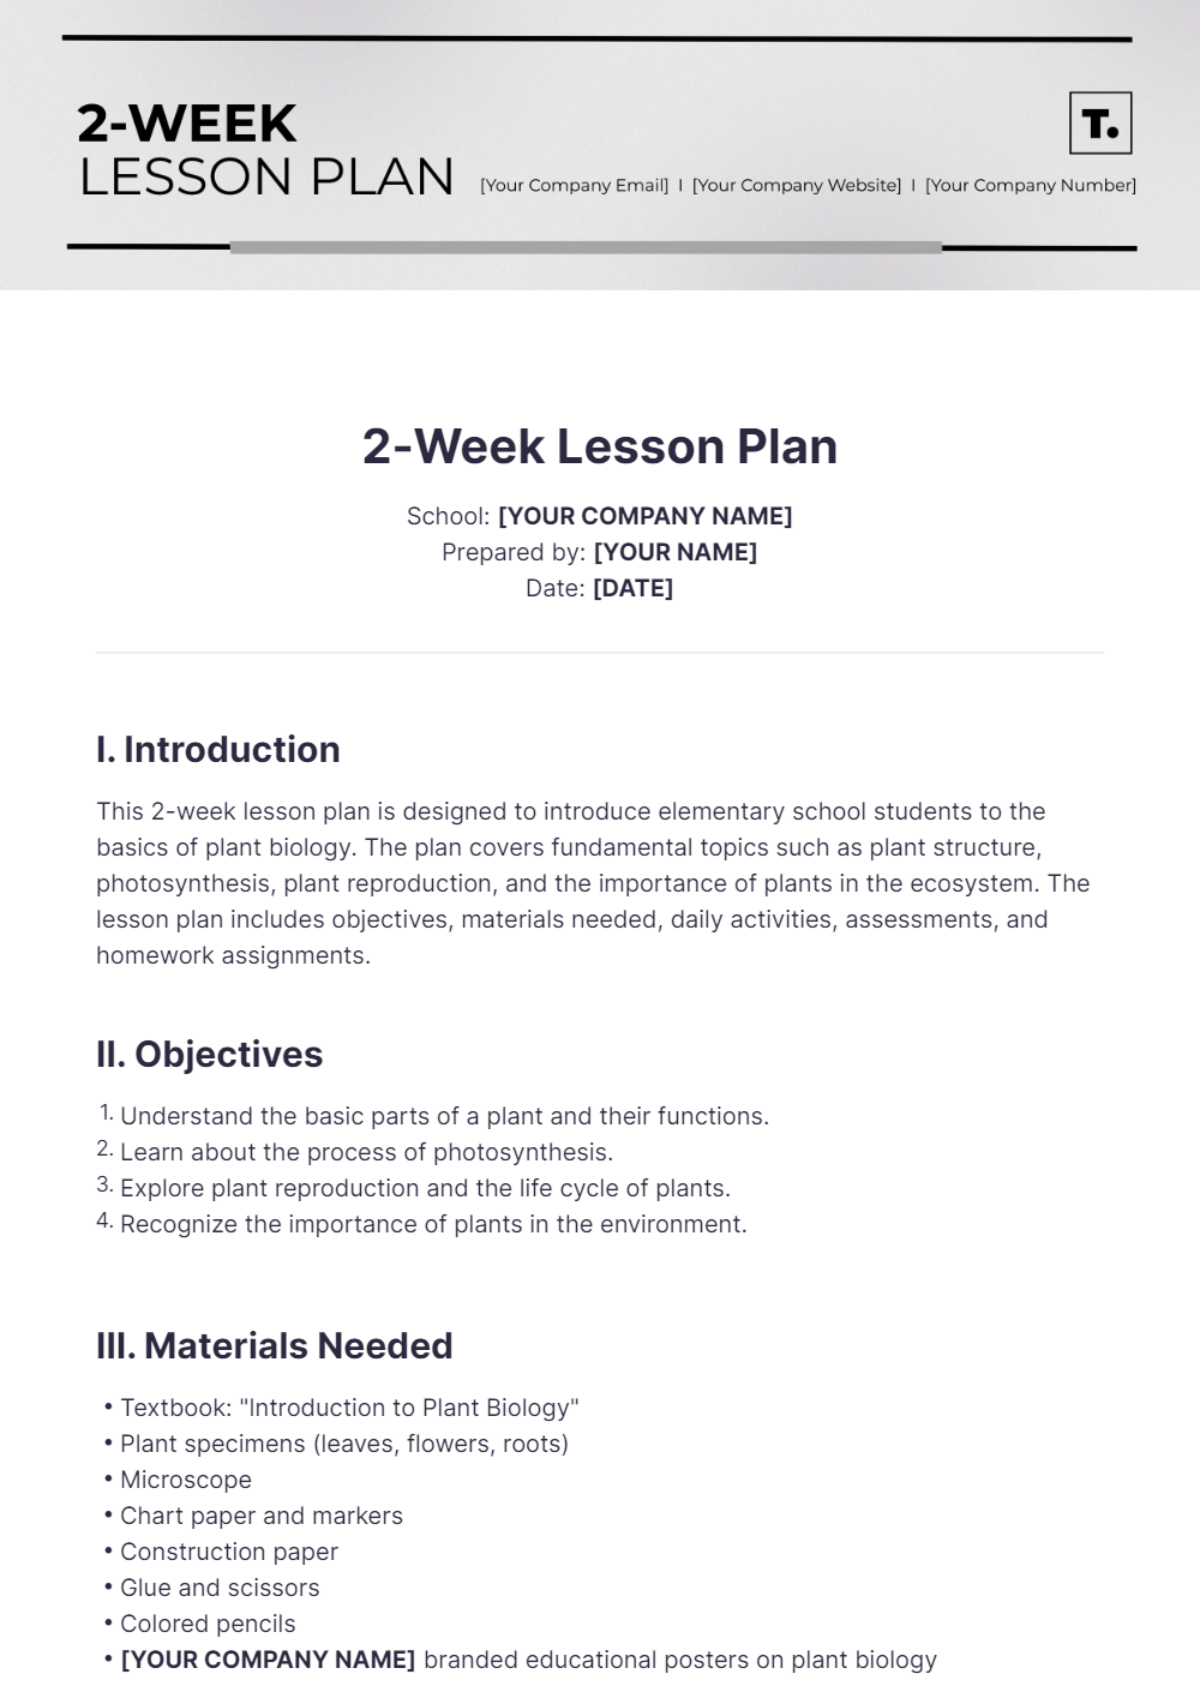 Free 2-Week Lesson Plan Template